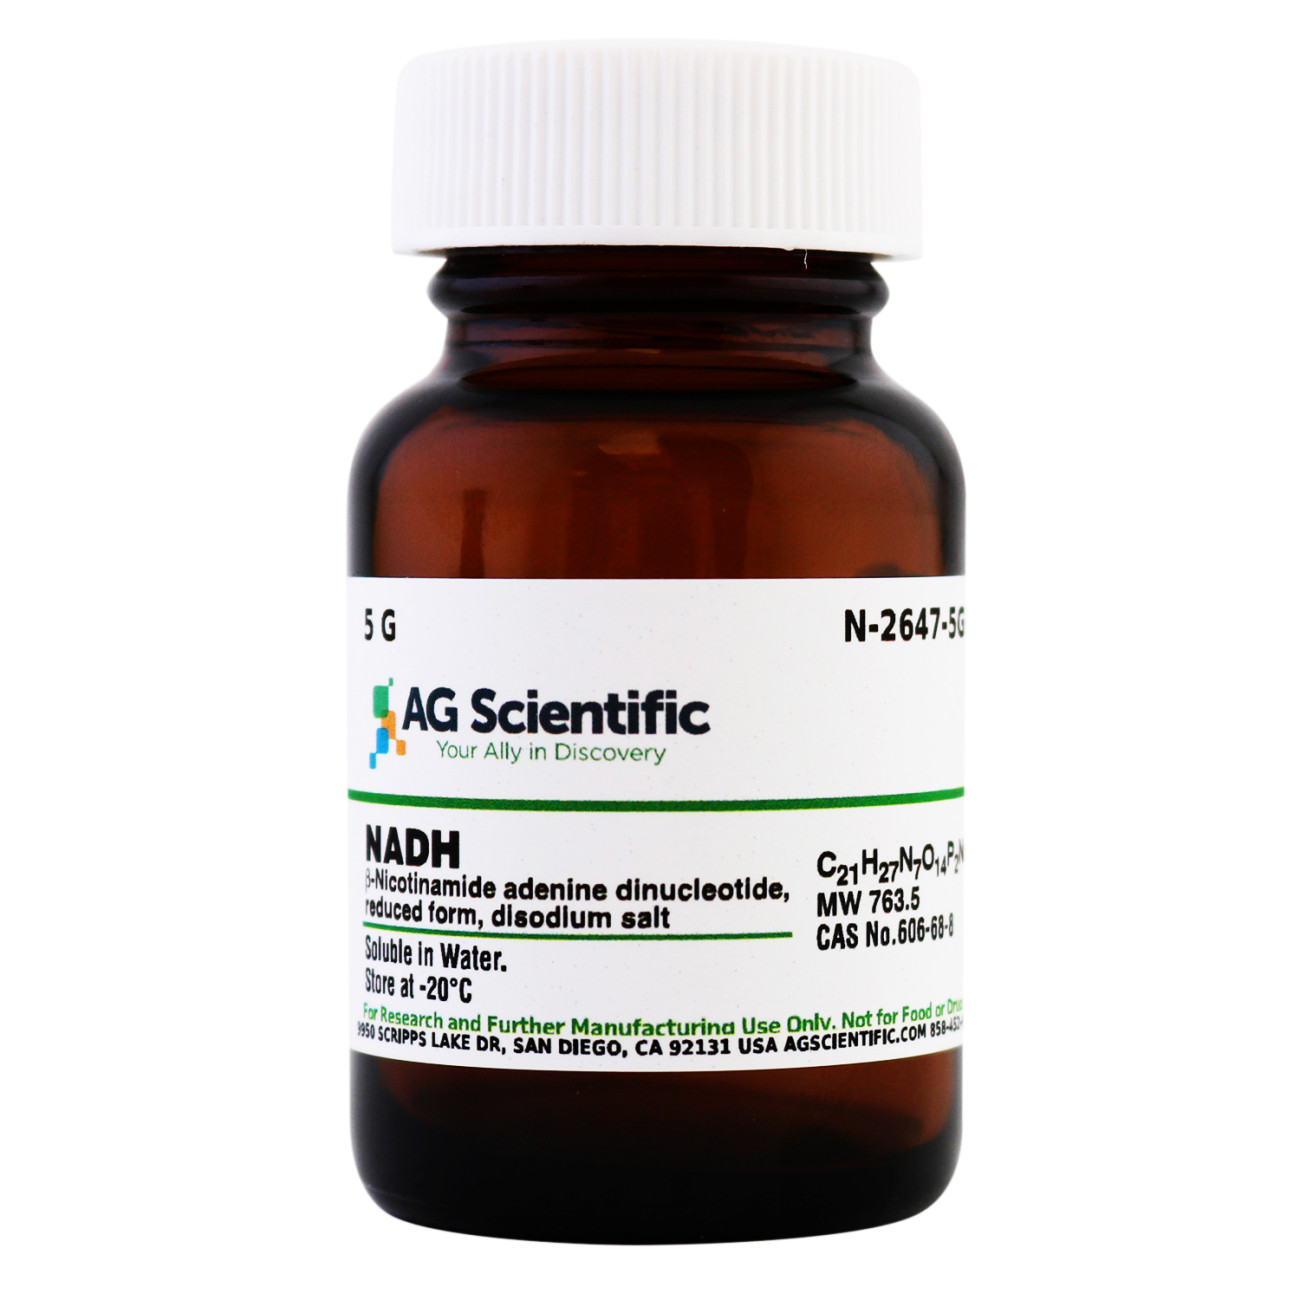 NADH [B-Nicotinamide adenine dinucleotide, reduced form, disodium salt], 5 G